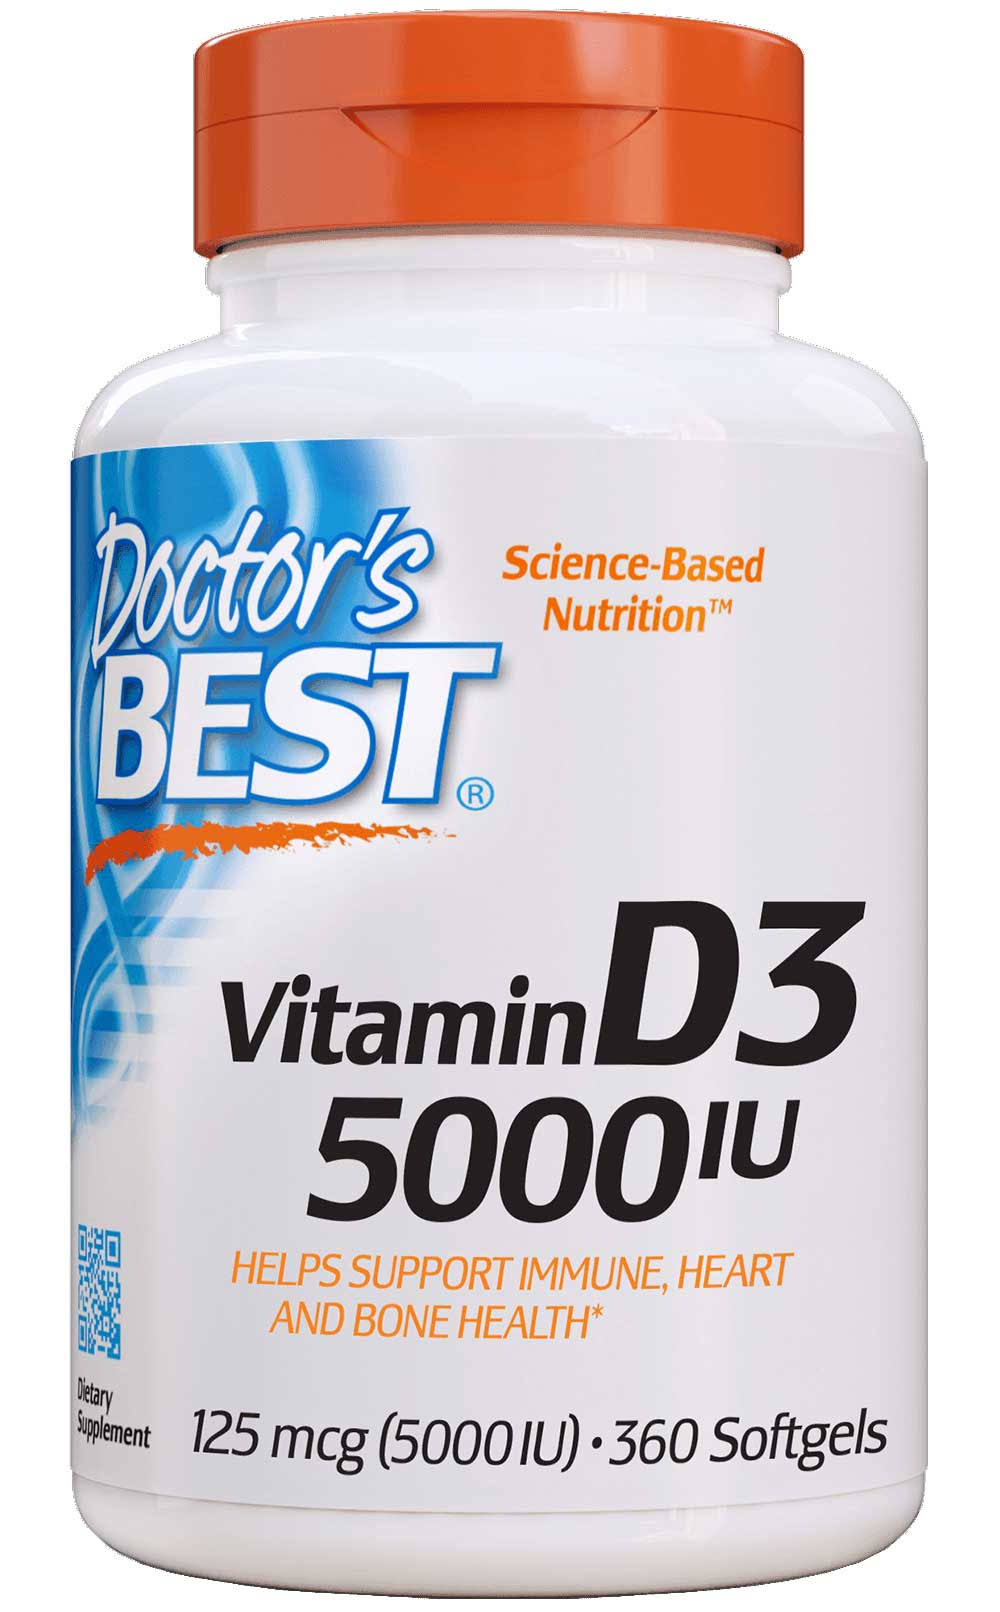 Doctor's Best Vitamin D3 5000IU Softgels - 360 Pack